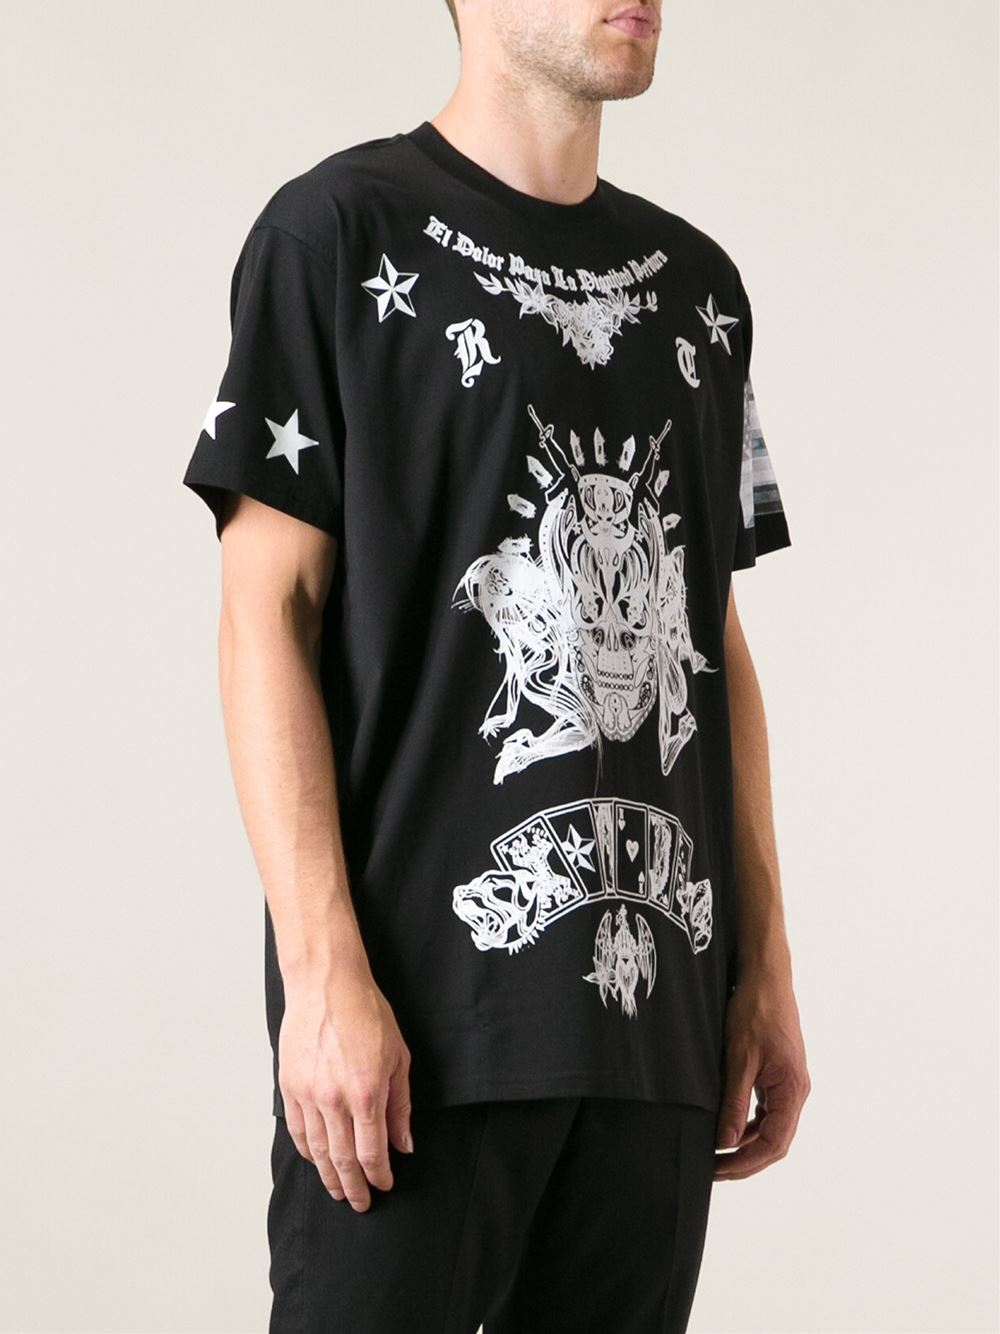 Lyst - Givenchy Skull Print T-Shirt in Black for Men